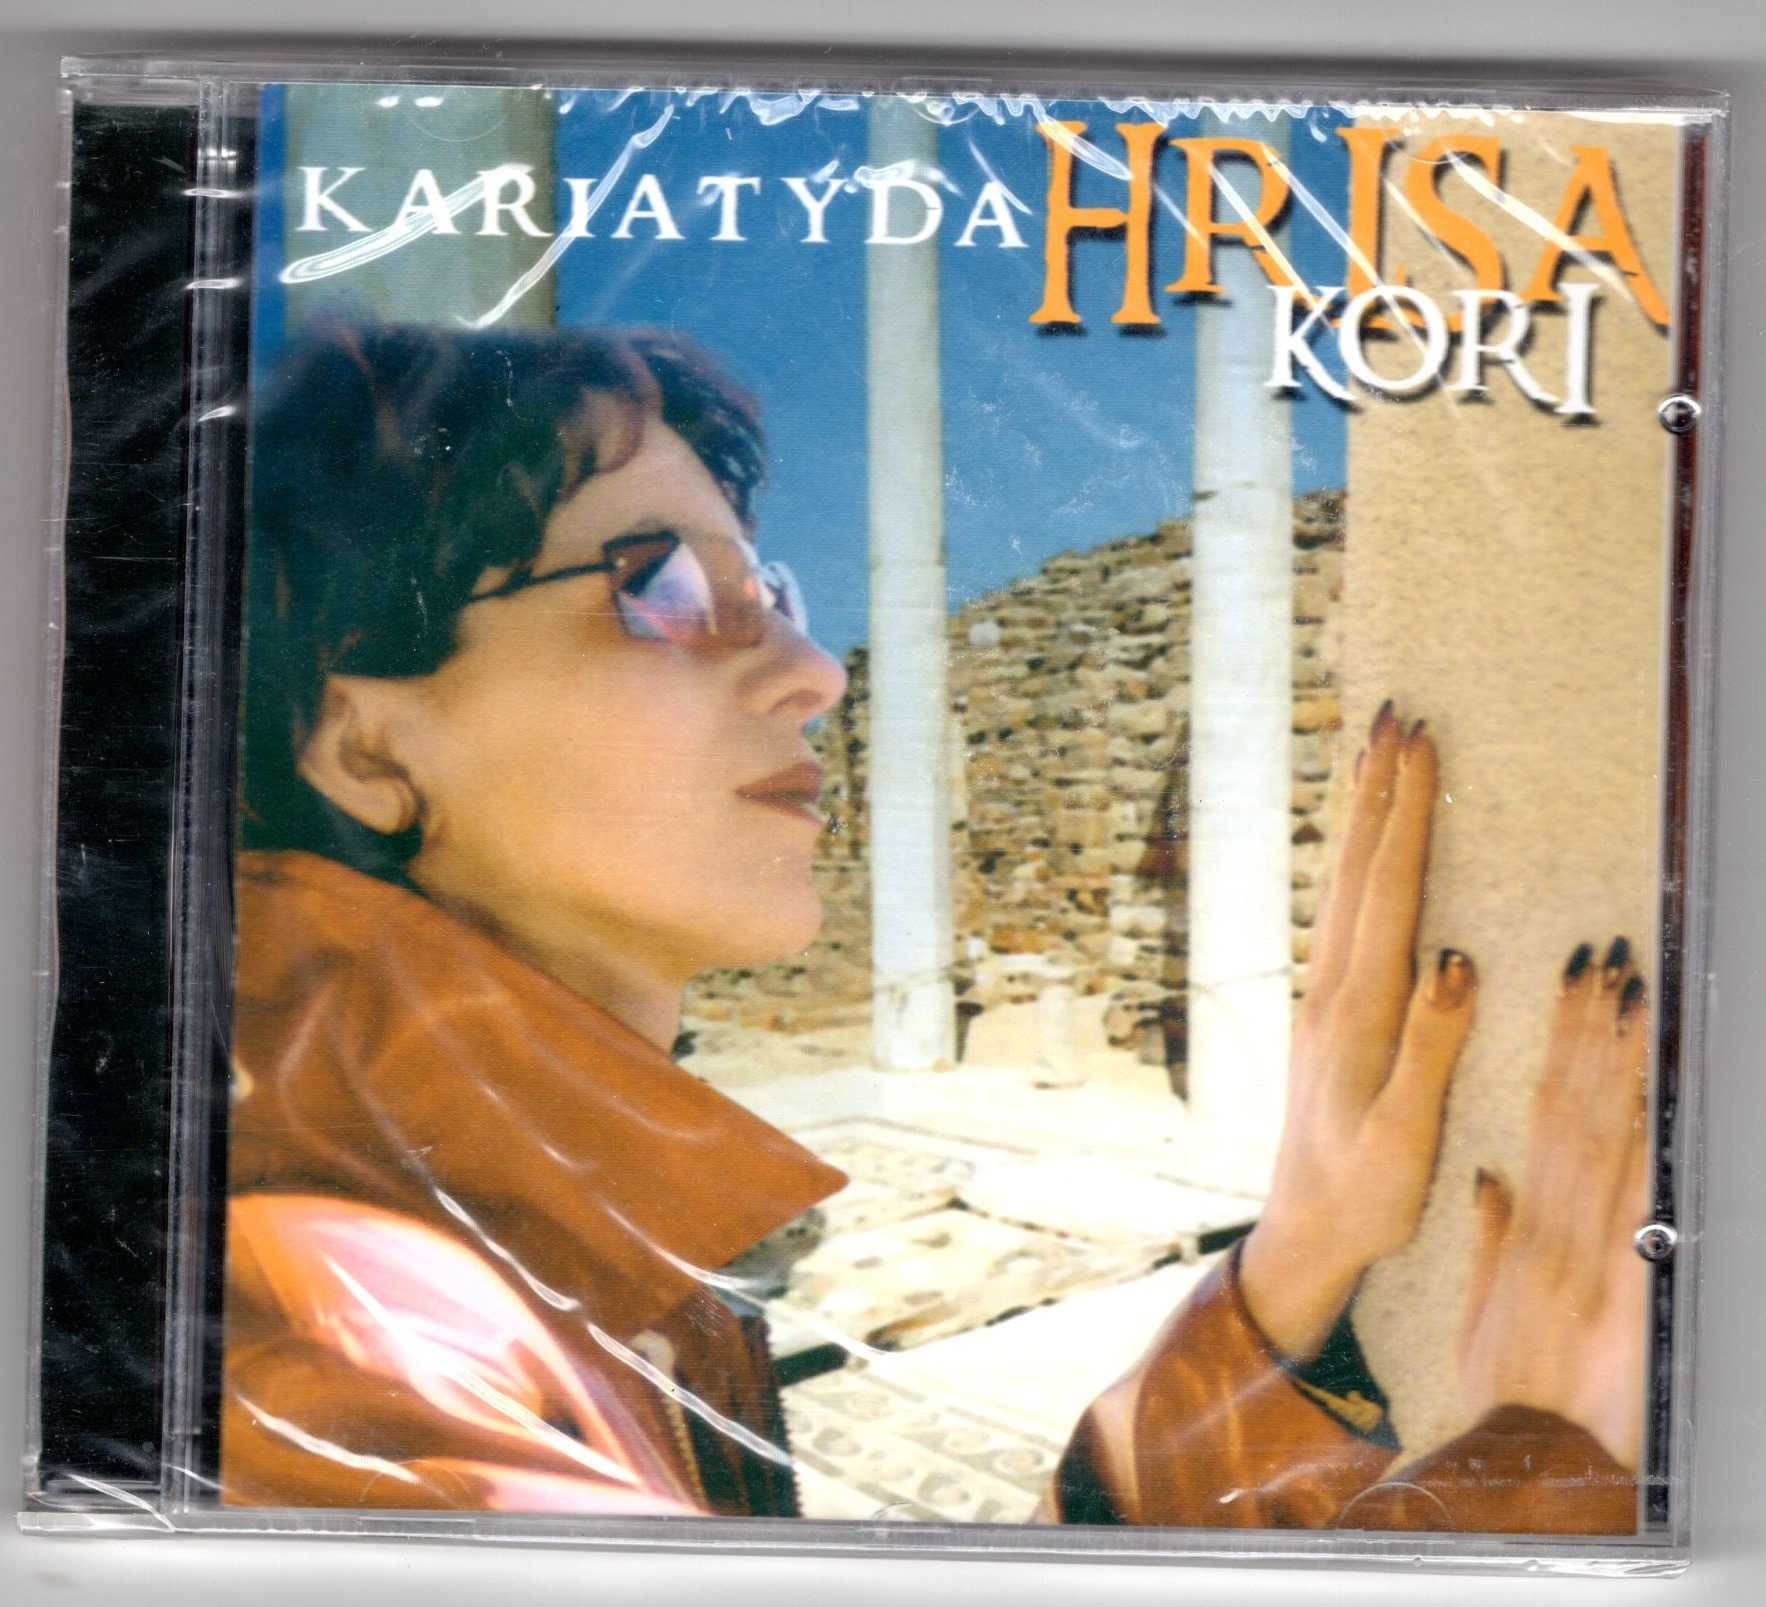 Hrisa Kori - Kariatyda (CD)